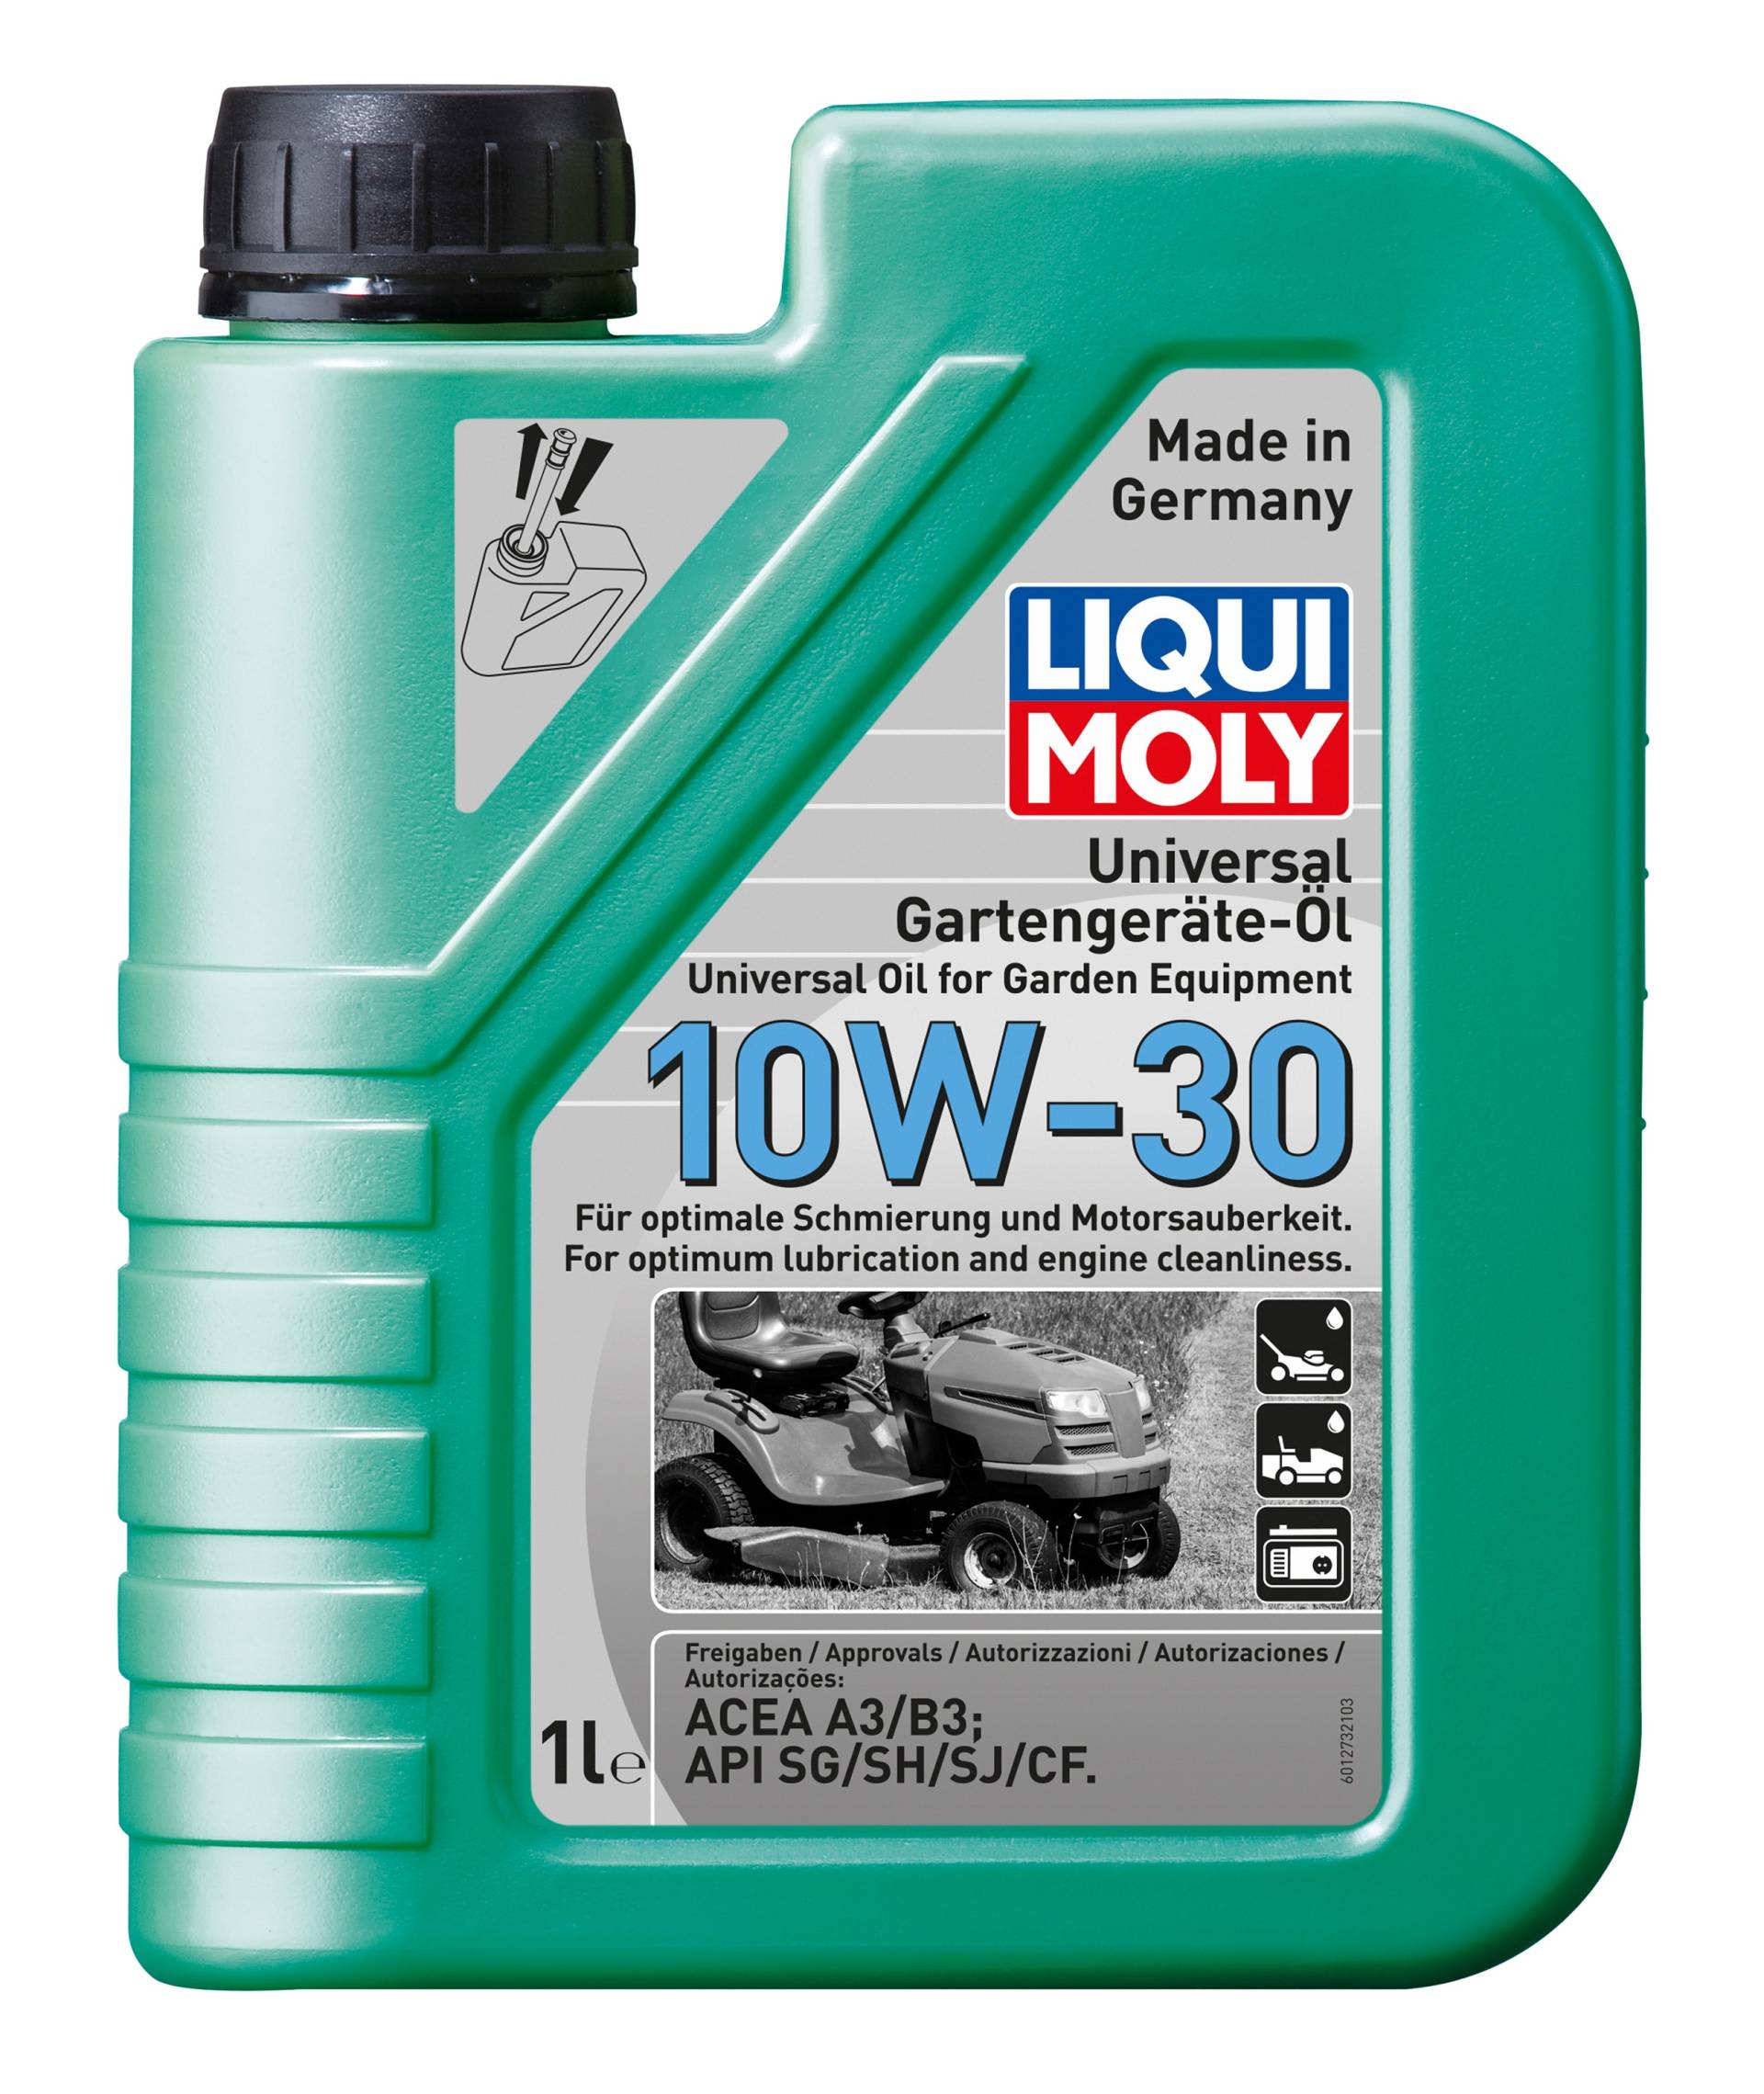 Liqui Moly universal Gartengeräteöl 10W-30, 1 Liter von Liqui Moly